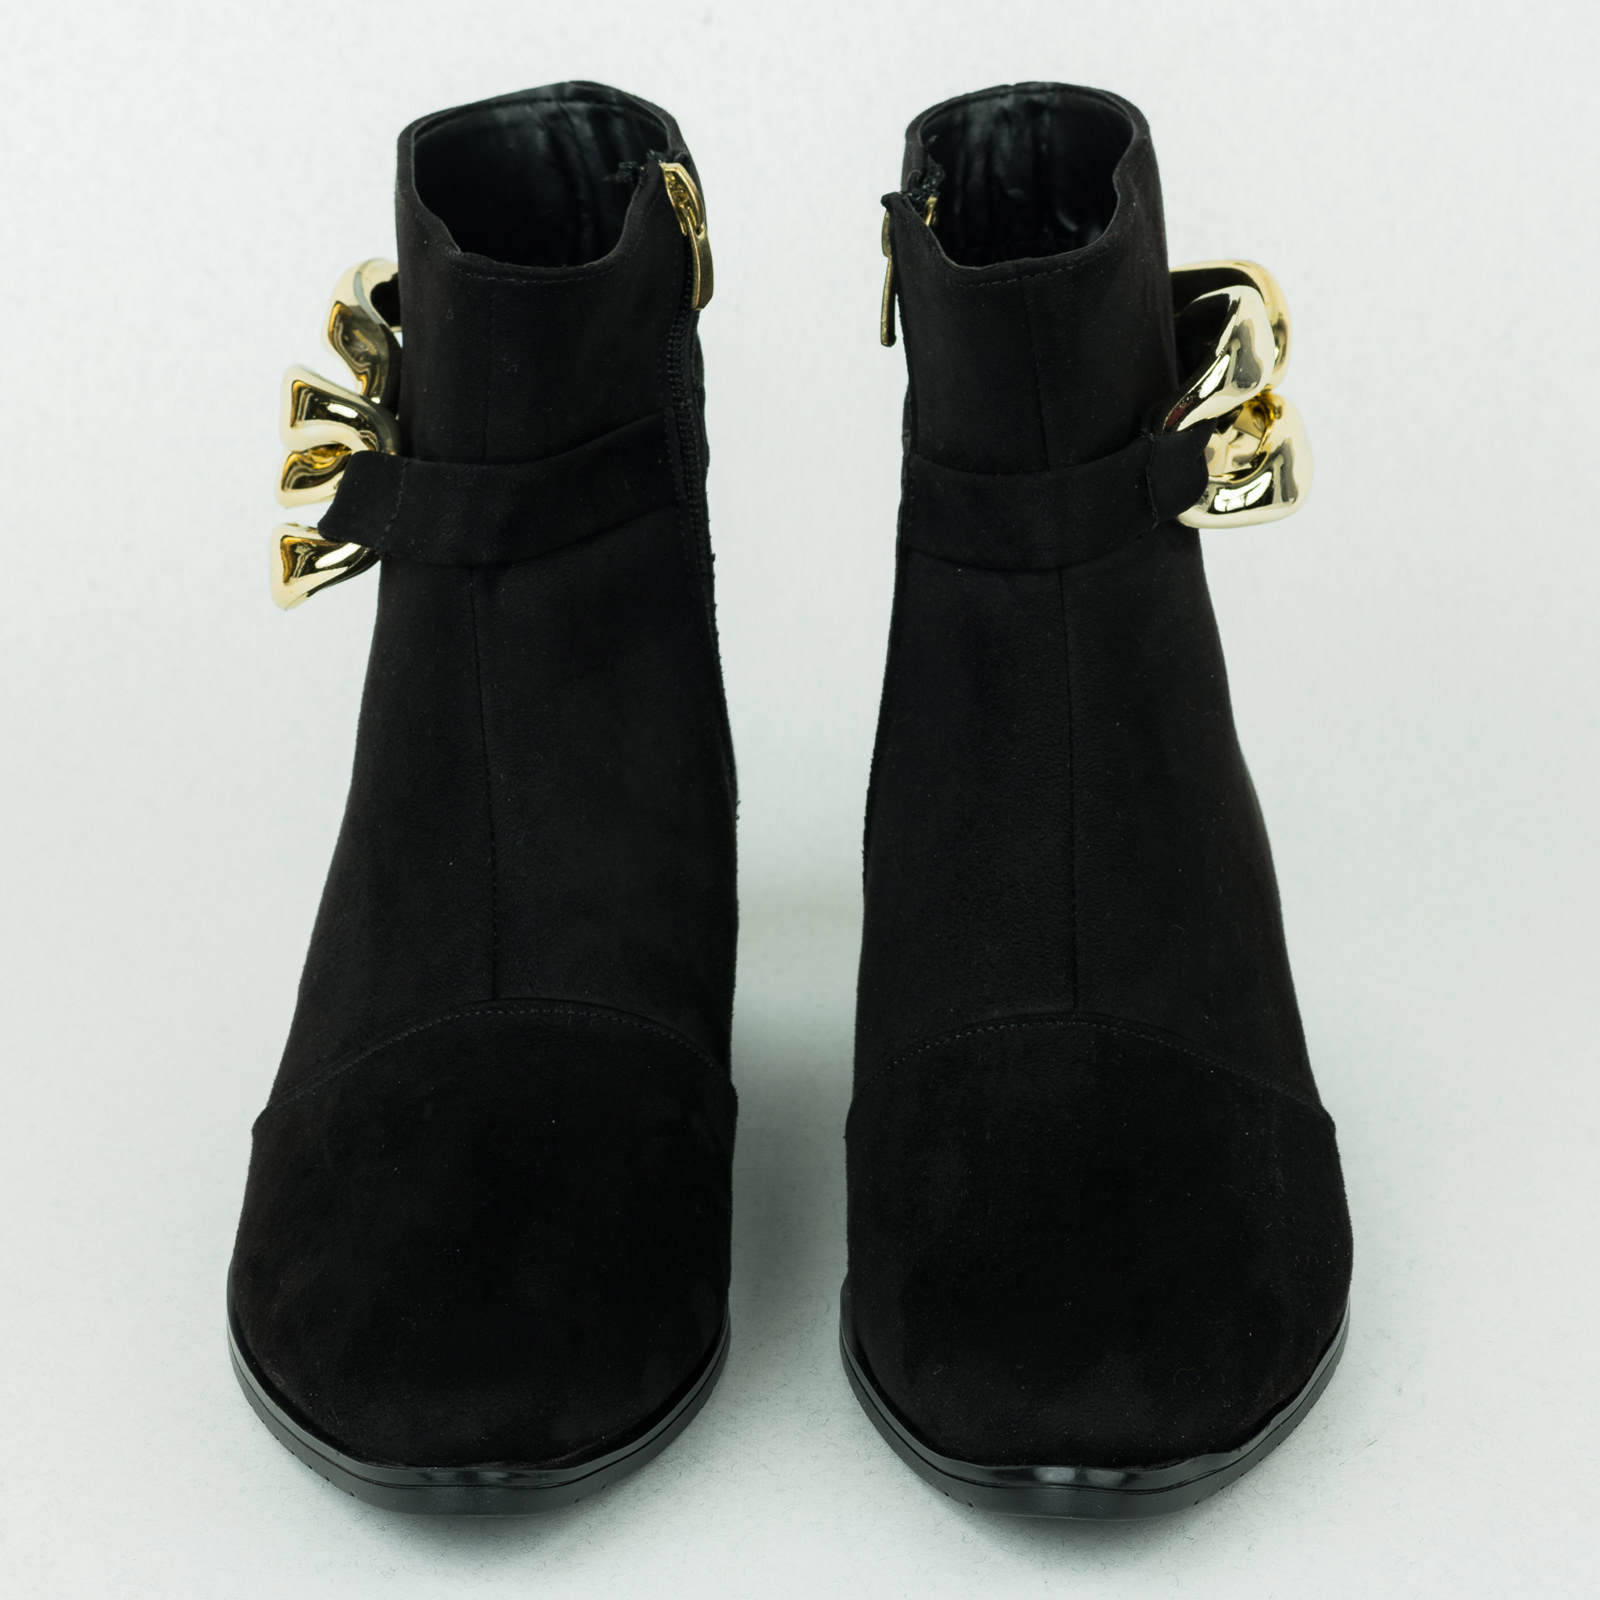 Women ankle boots B357 - BLACK